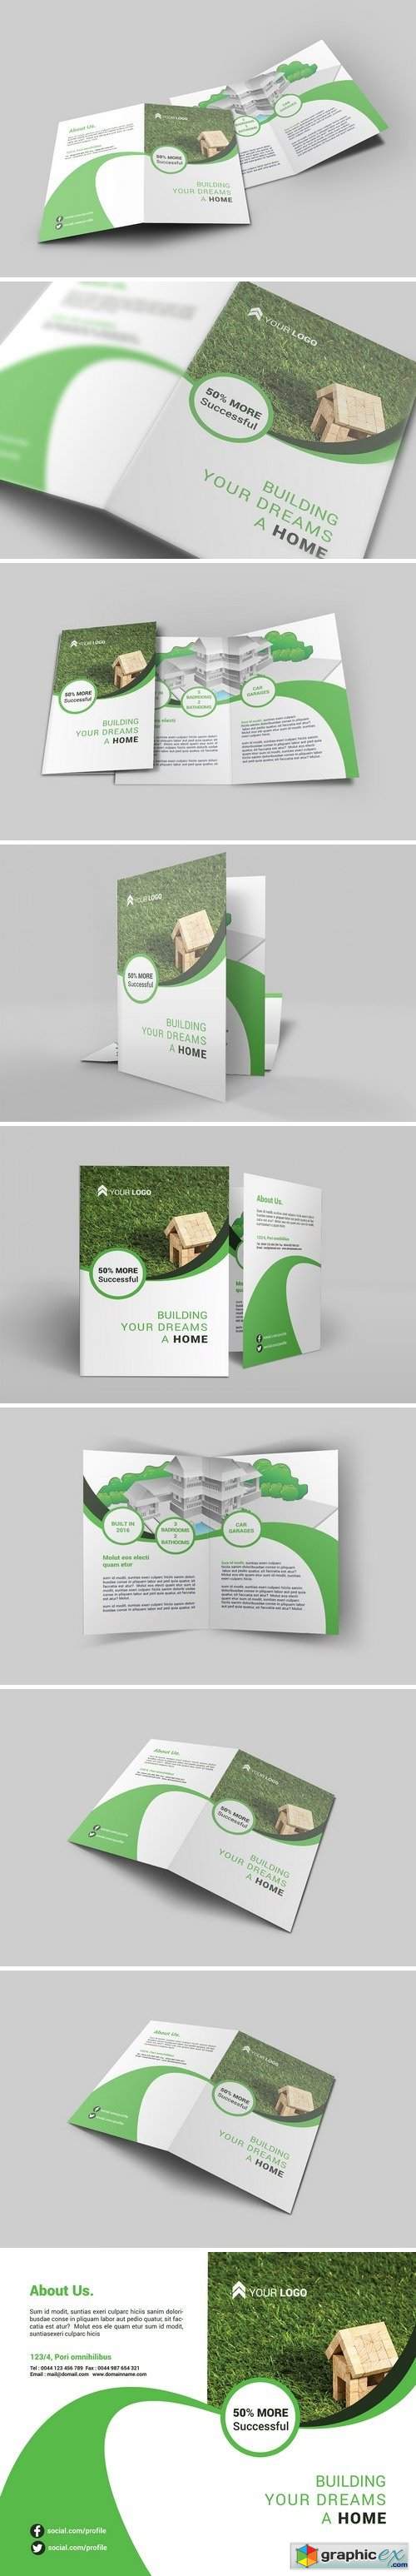 Real Estate Bi-Fold Brochure